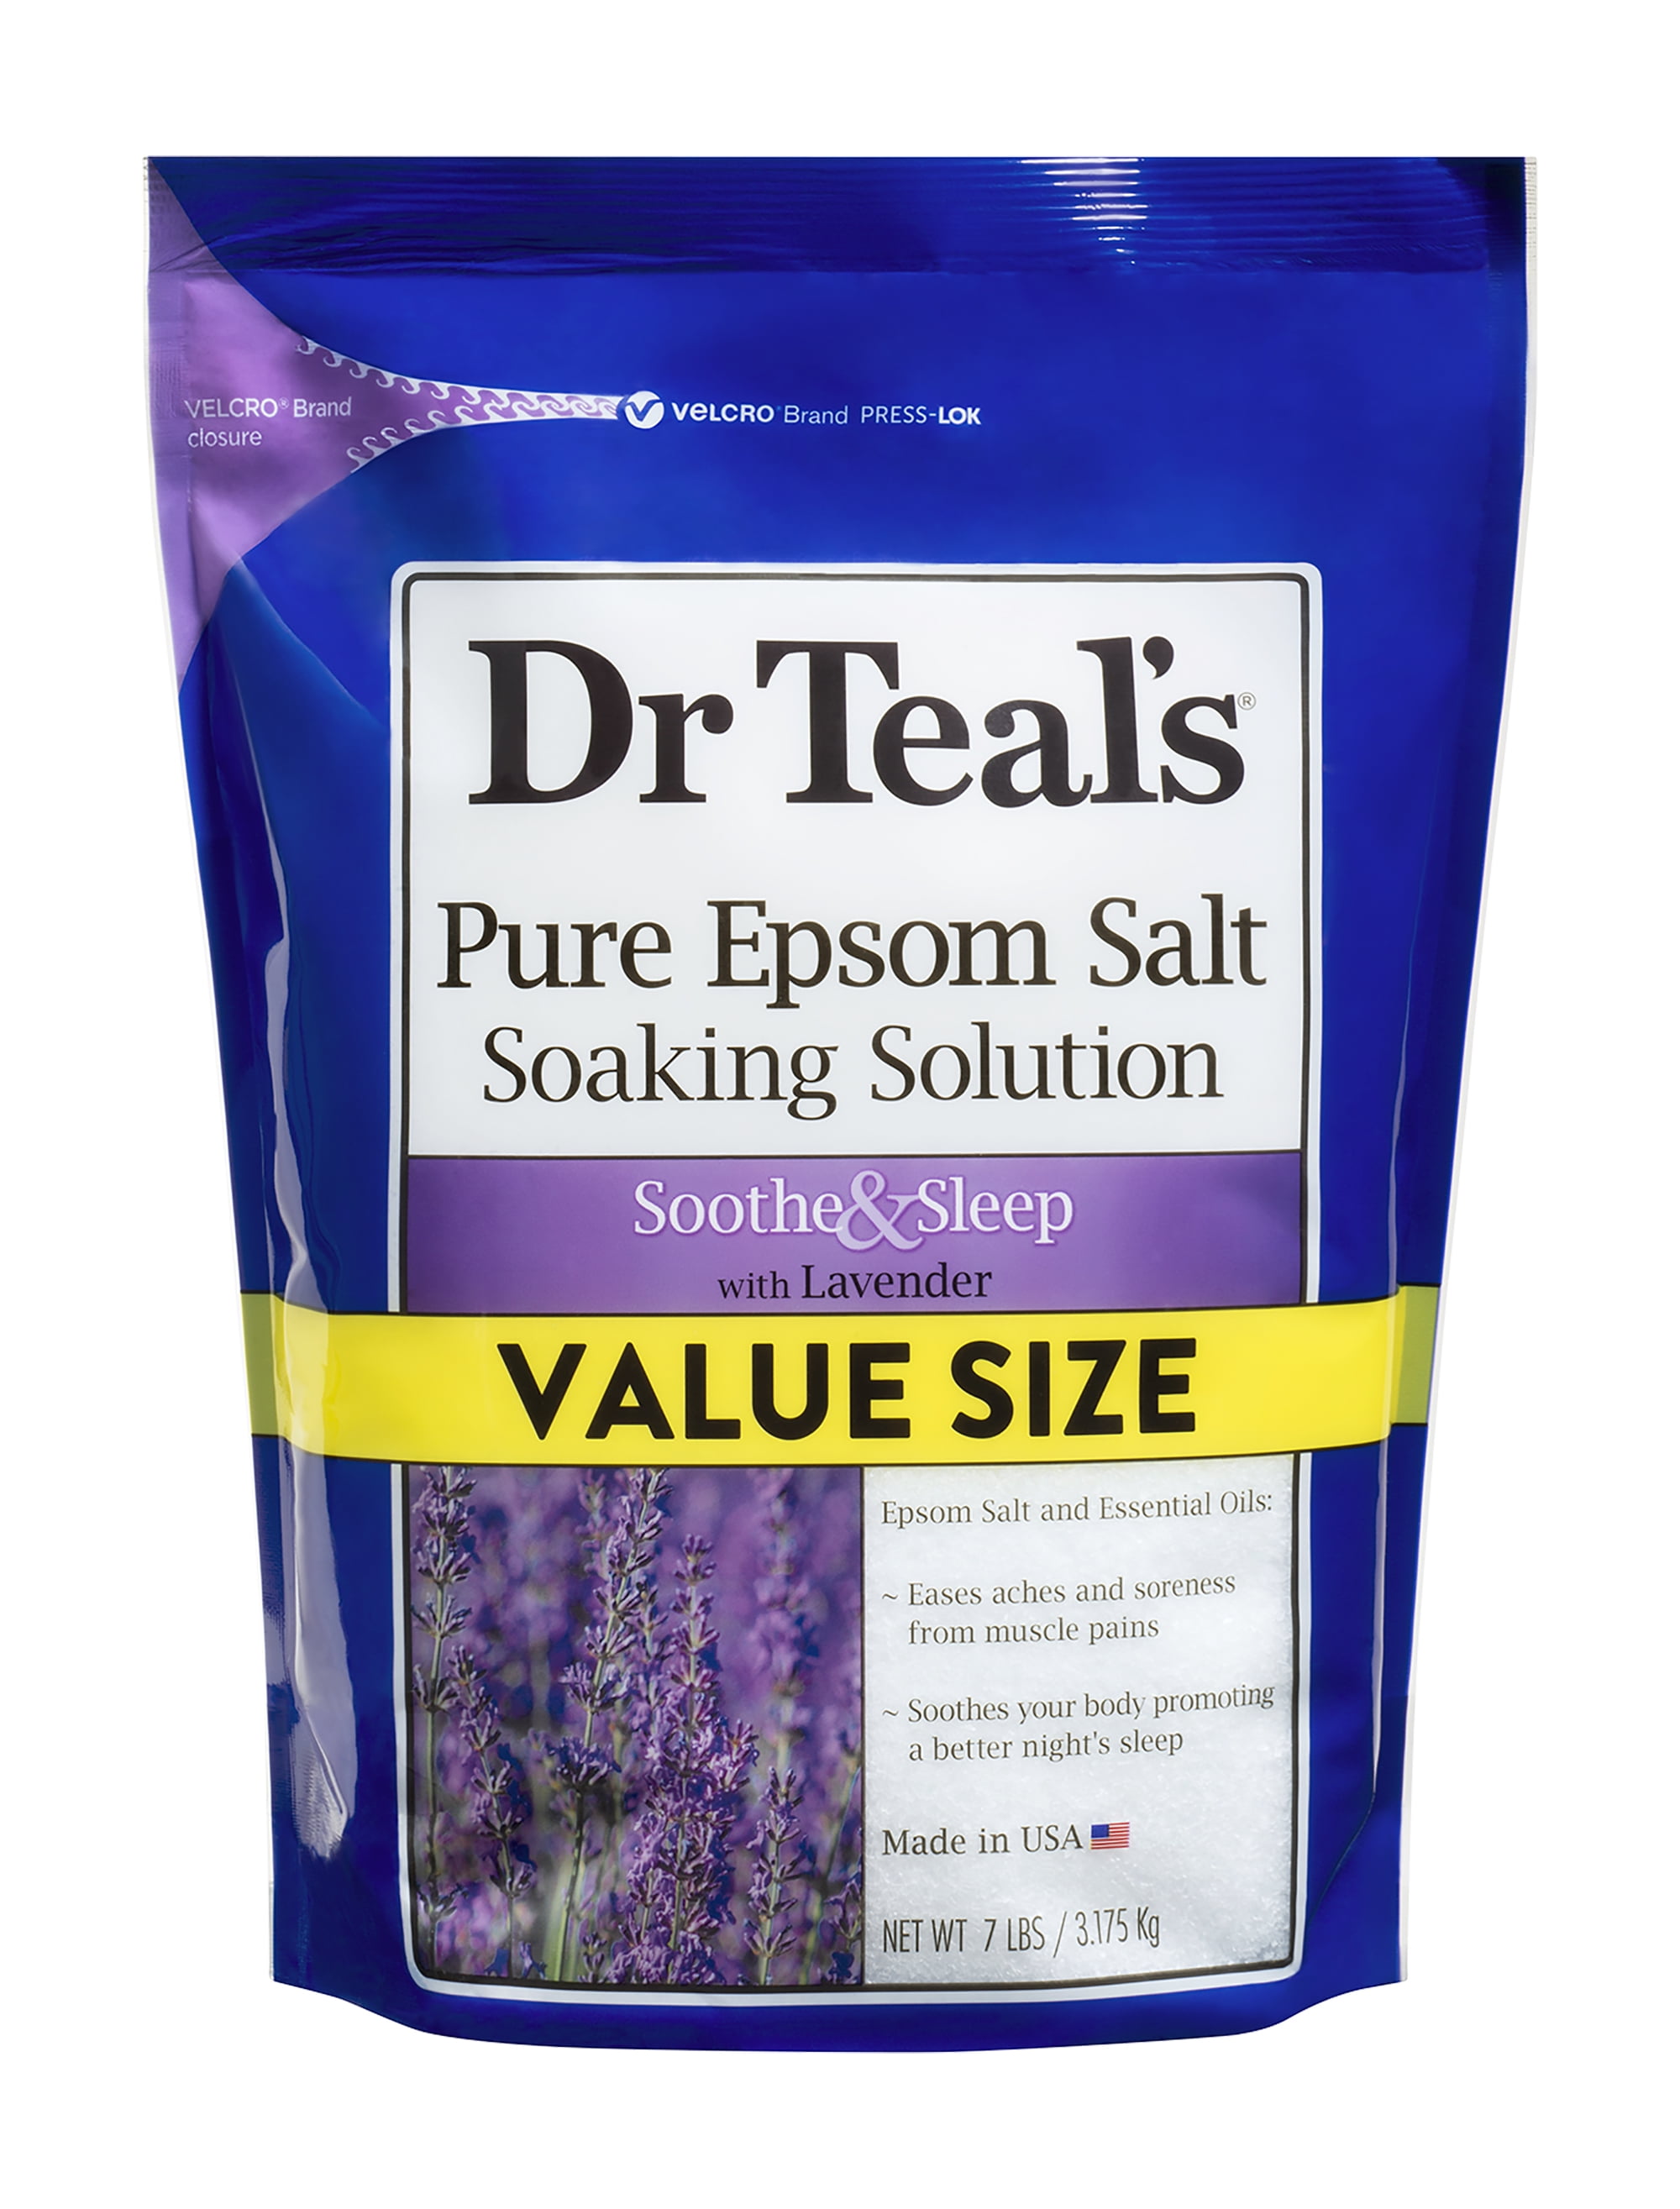 Dr Teal's Pure Epsom Salt, Soothe & Sleep, Lavender, 7lbs - Walmart.com